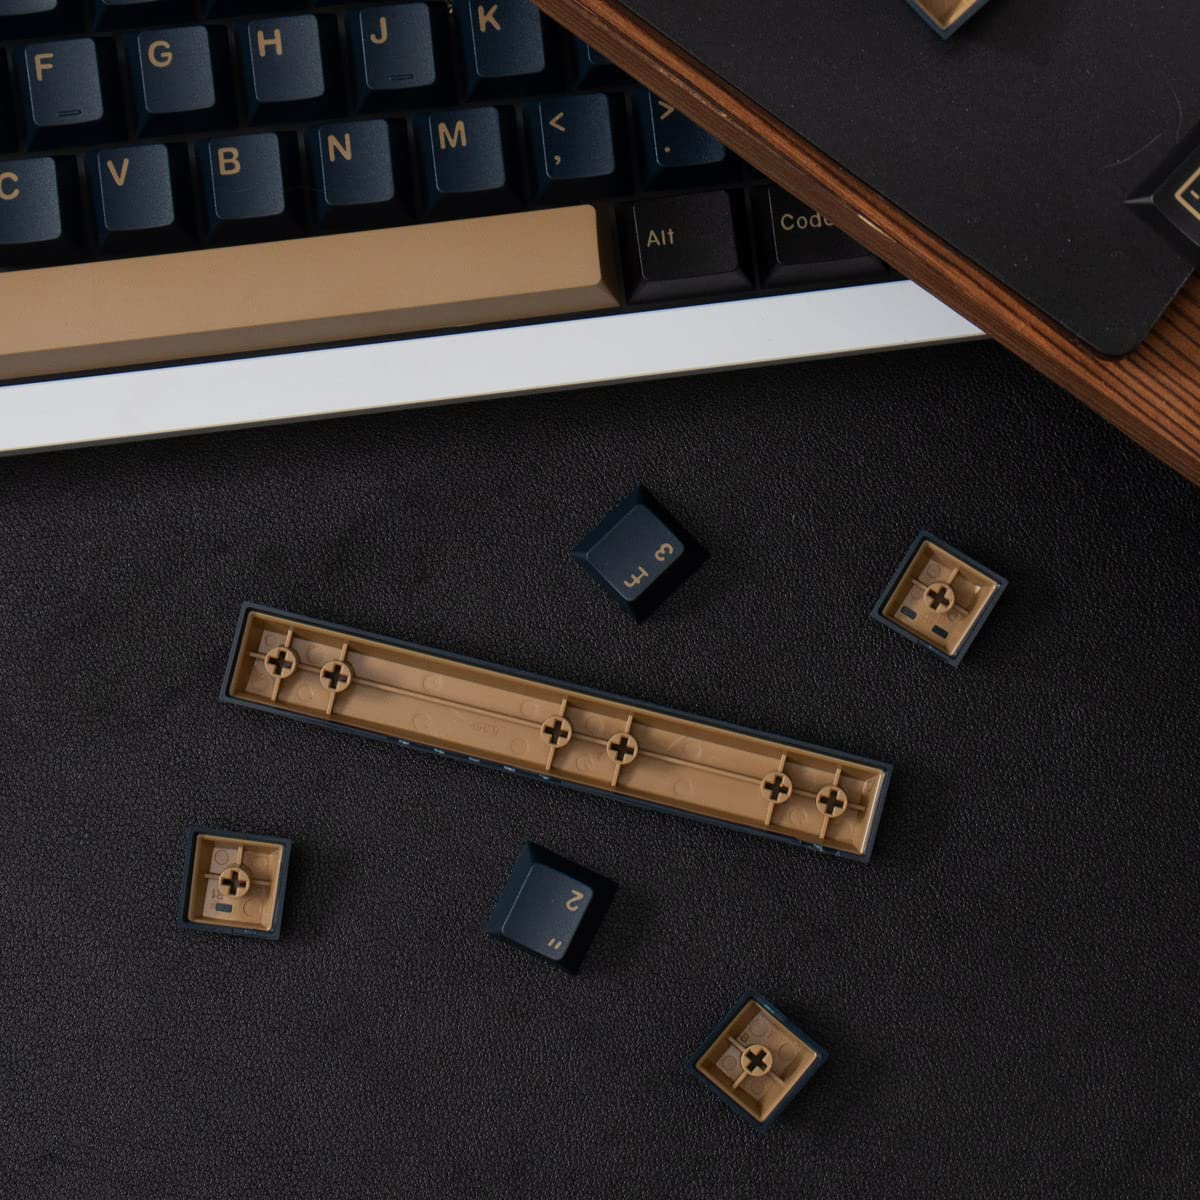 Samurai Blue Keycap Set, Cherry Profile, Double Shot ABS Key Cap